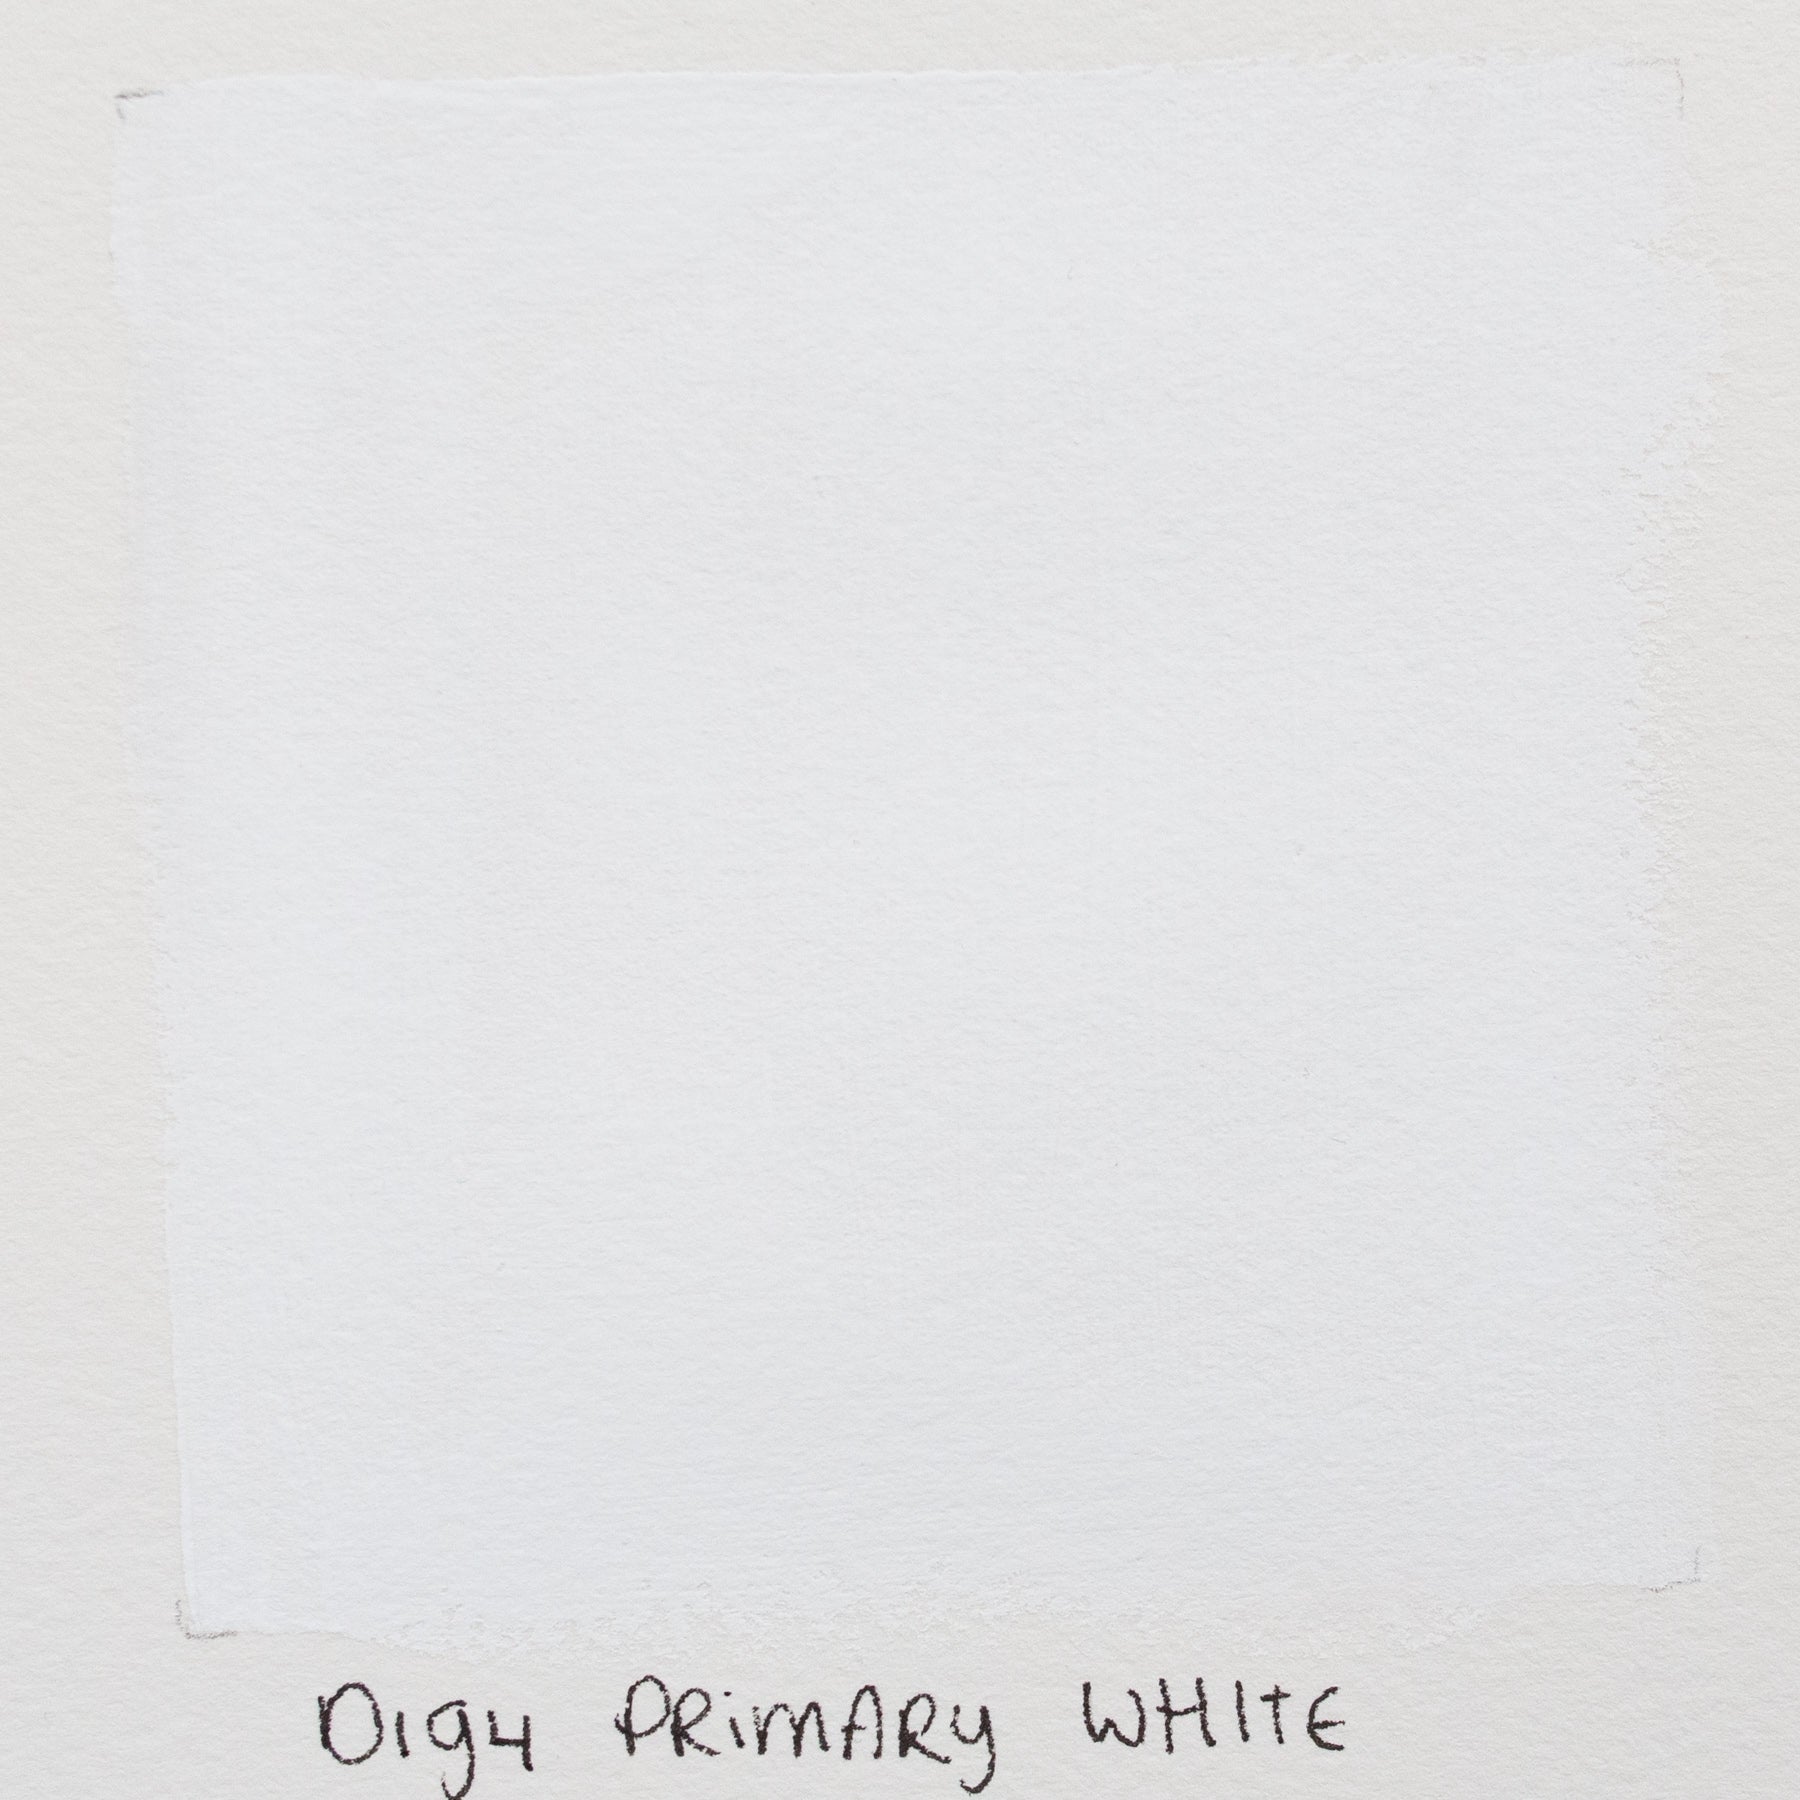 Holbein Acryla Gouache D194 A 'Primary White'